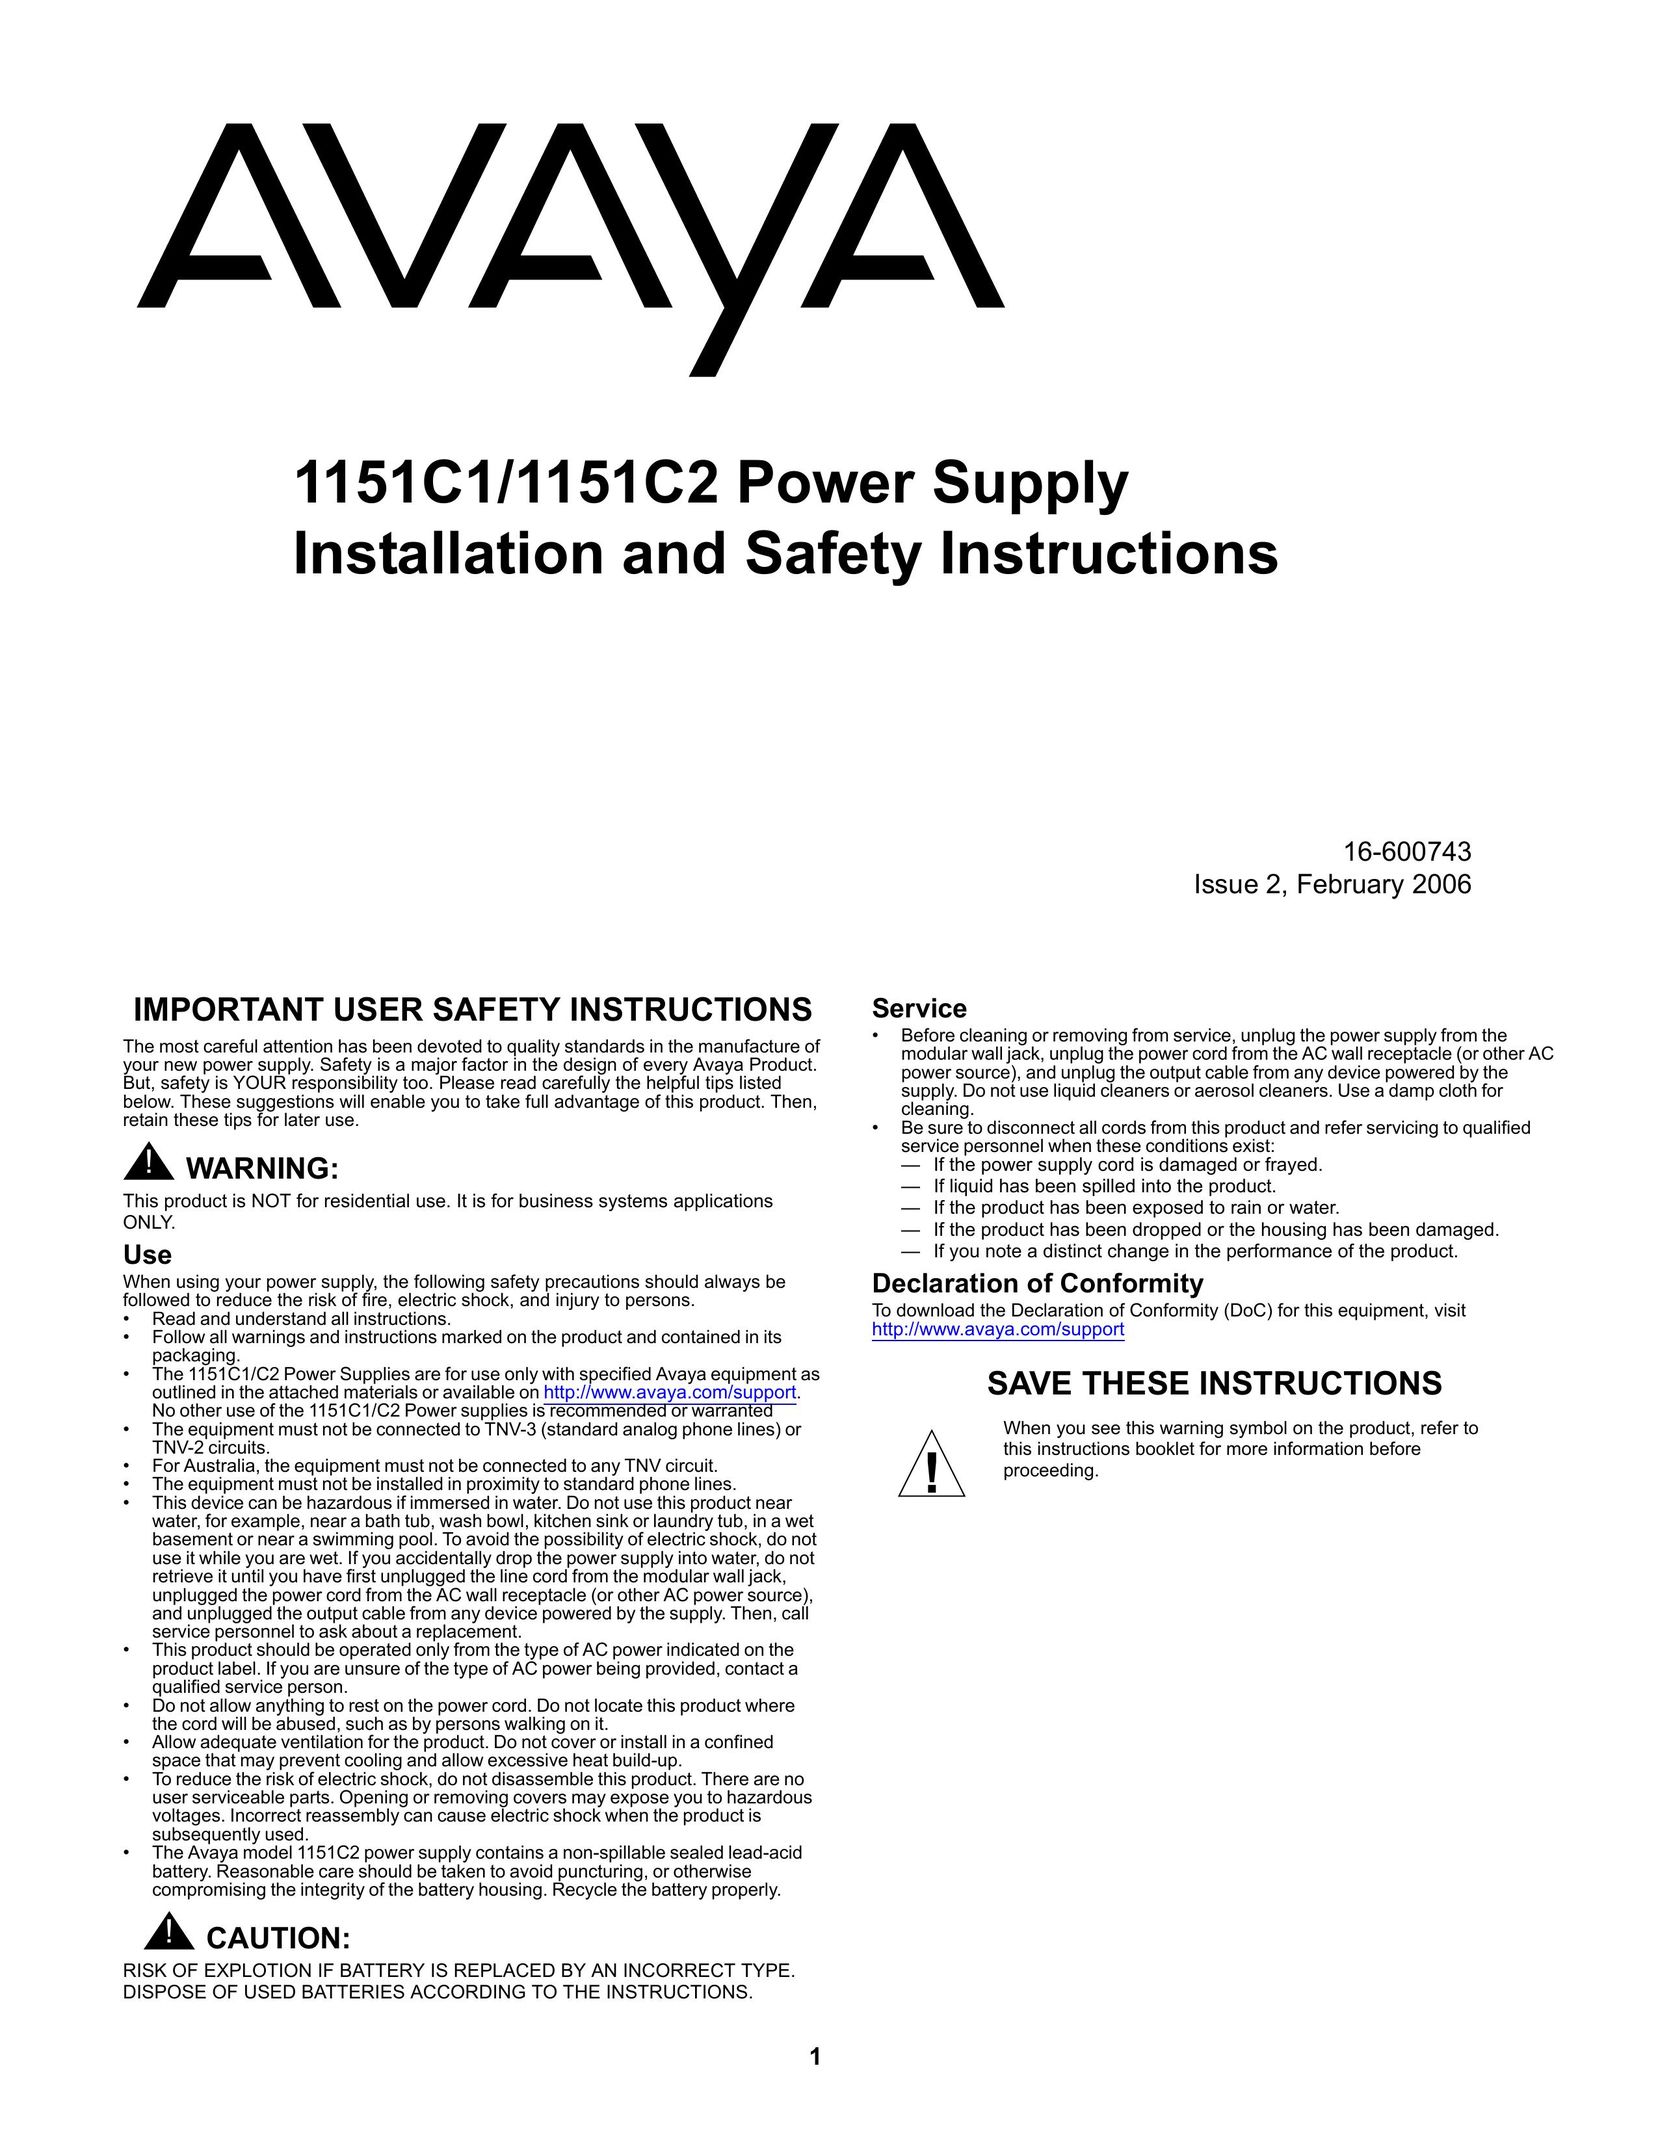 Avaya 1151C2 Power Supply User Manual